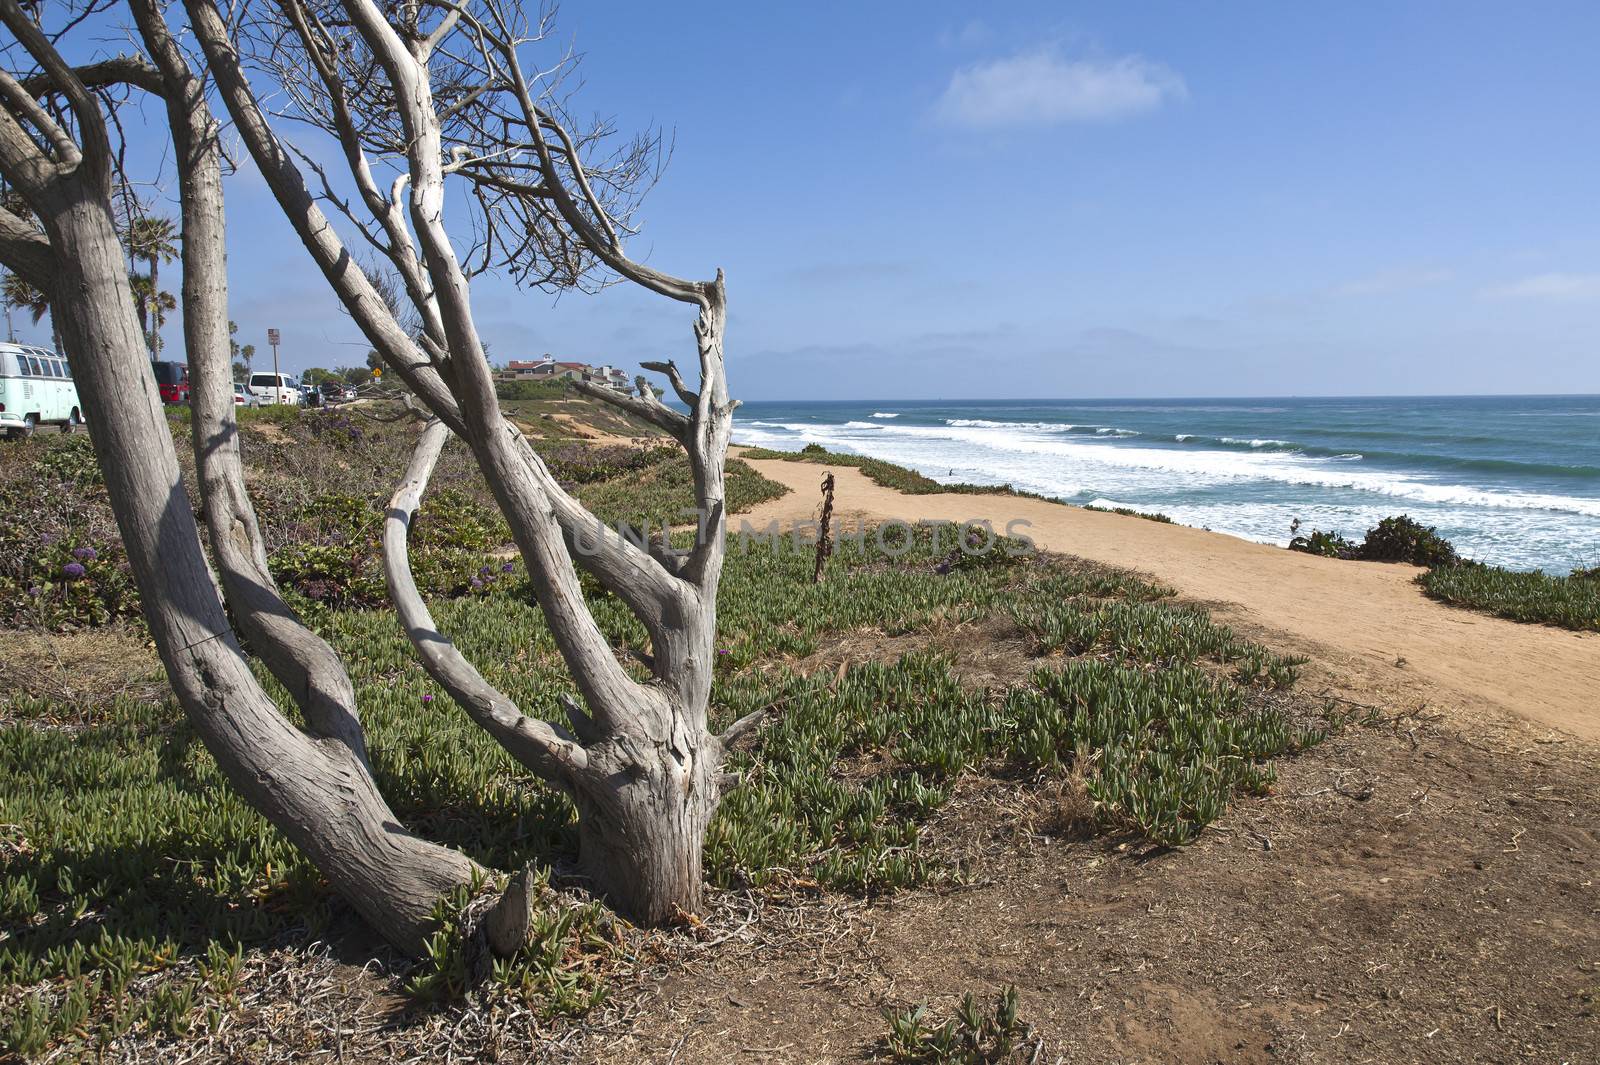 California shoreline and the surrounding vegetation.